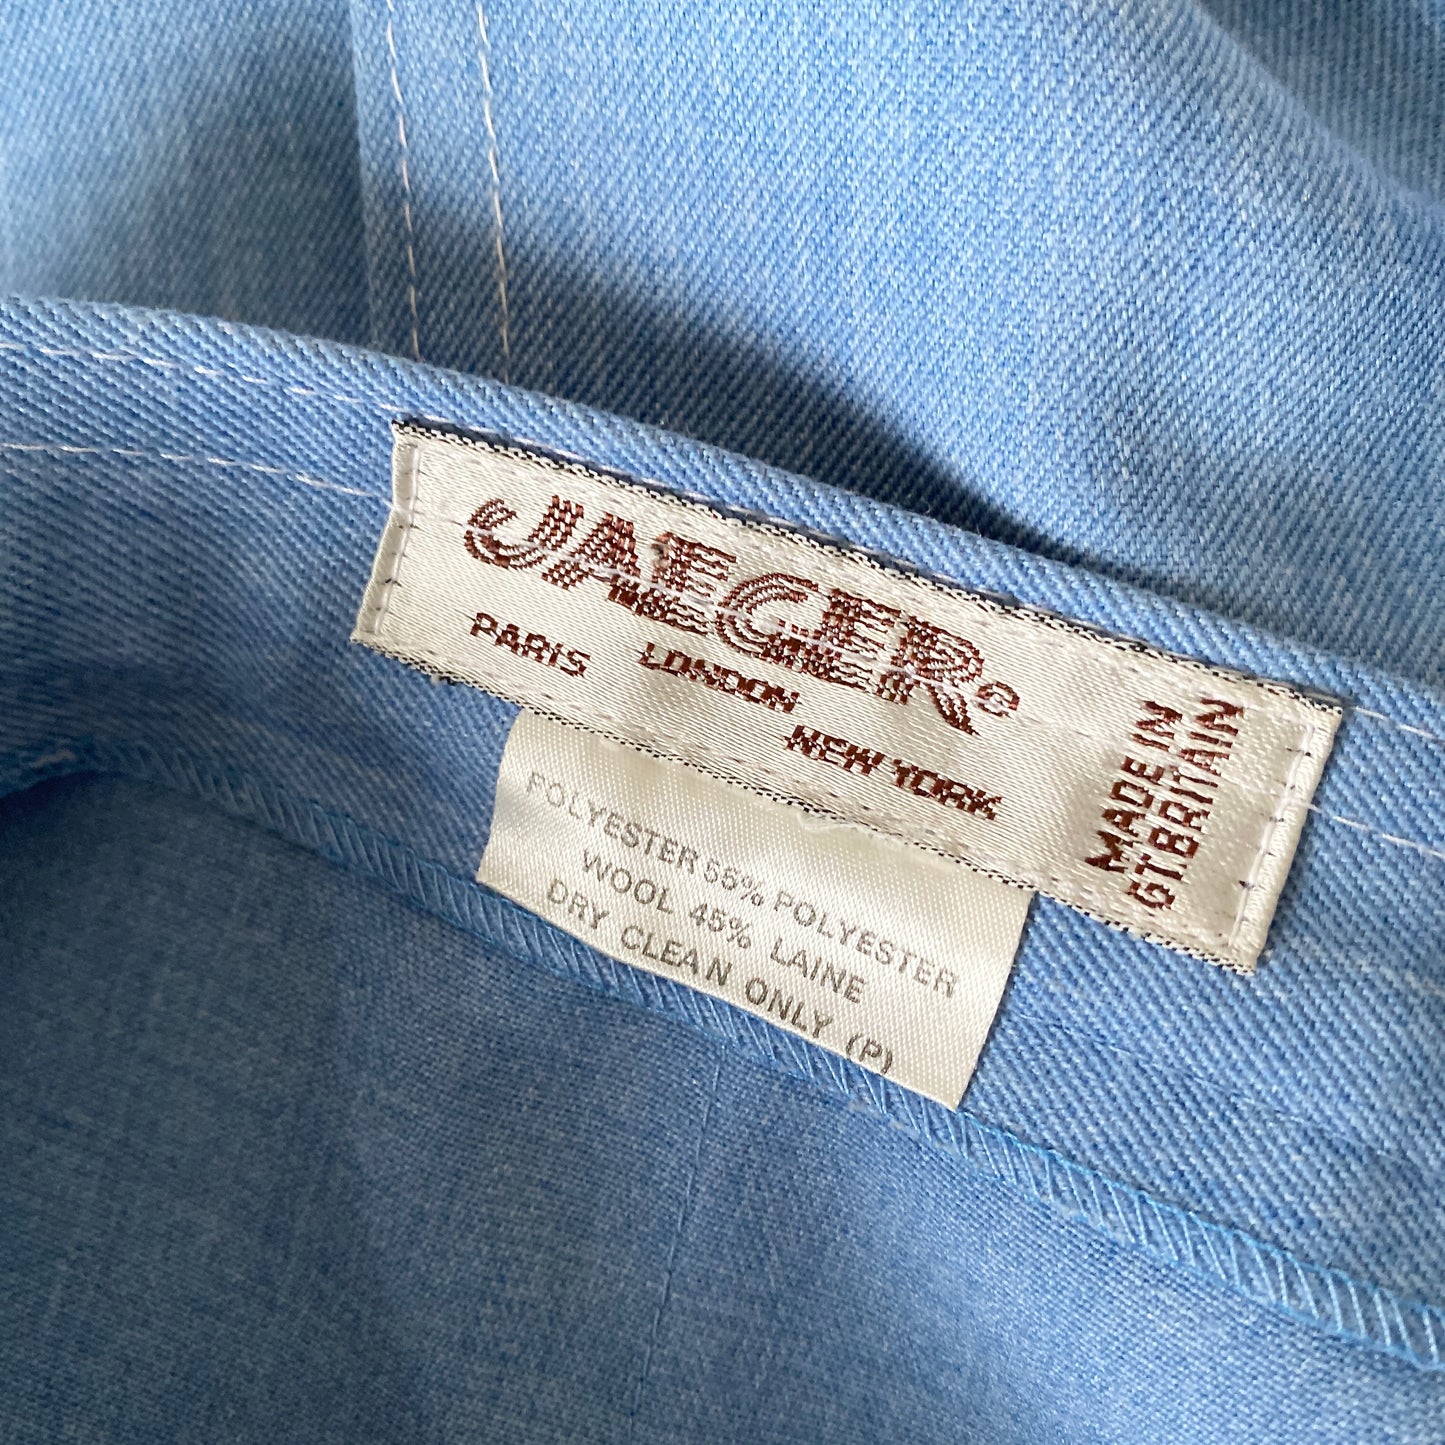 Jaeger Blue Skirt